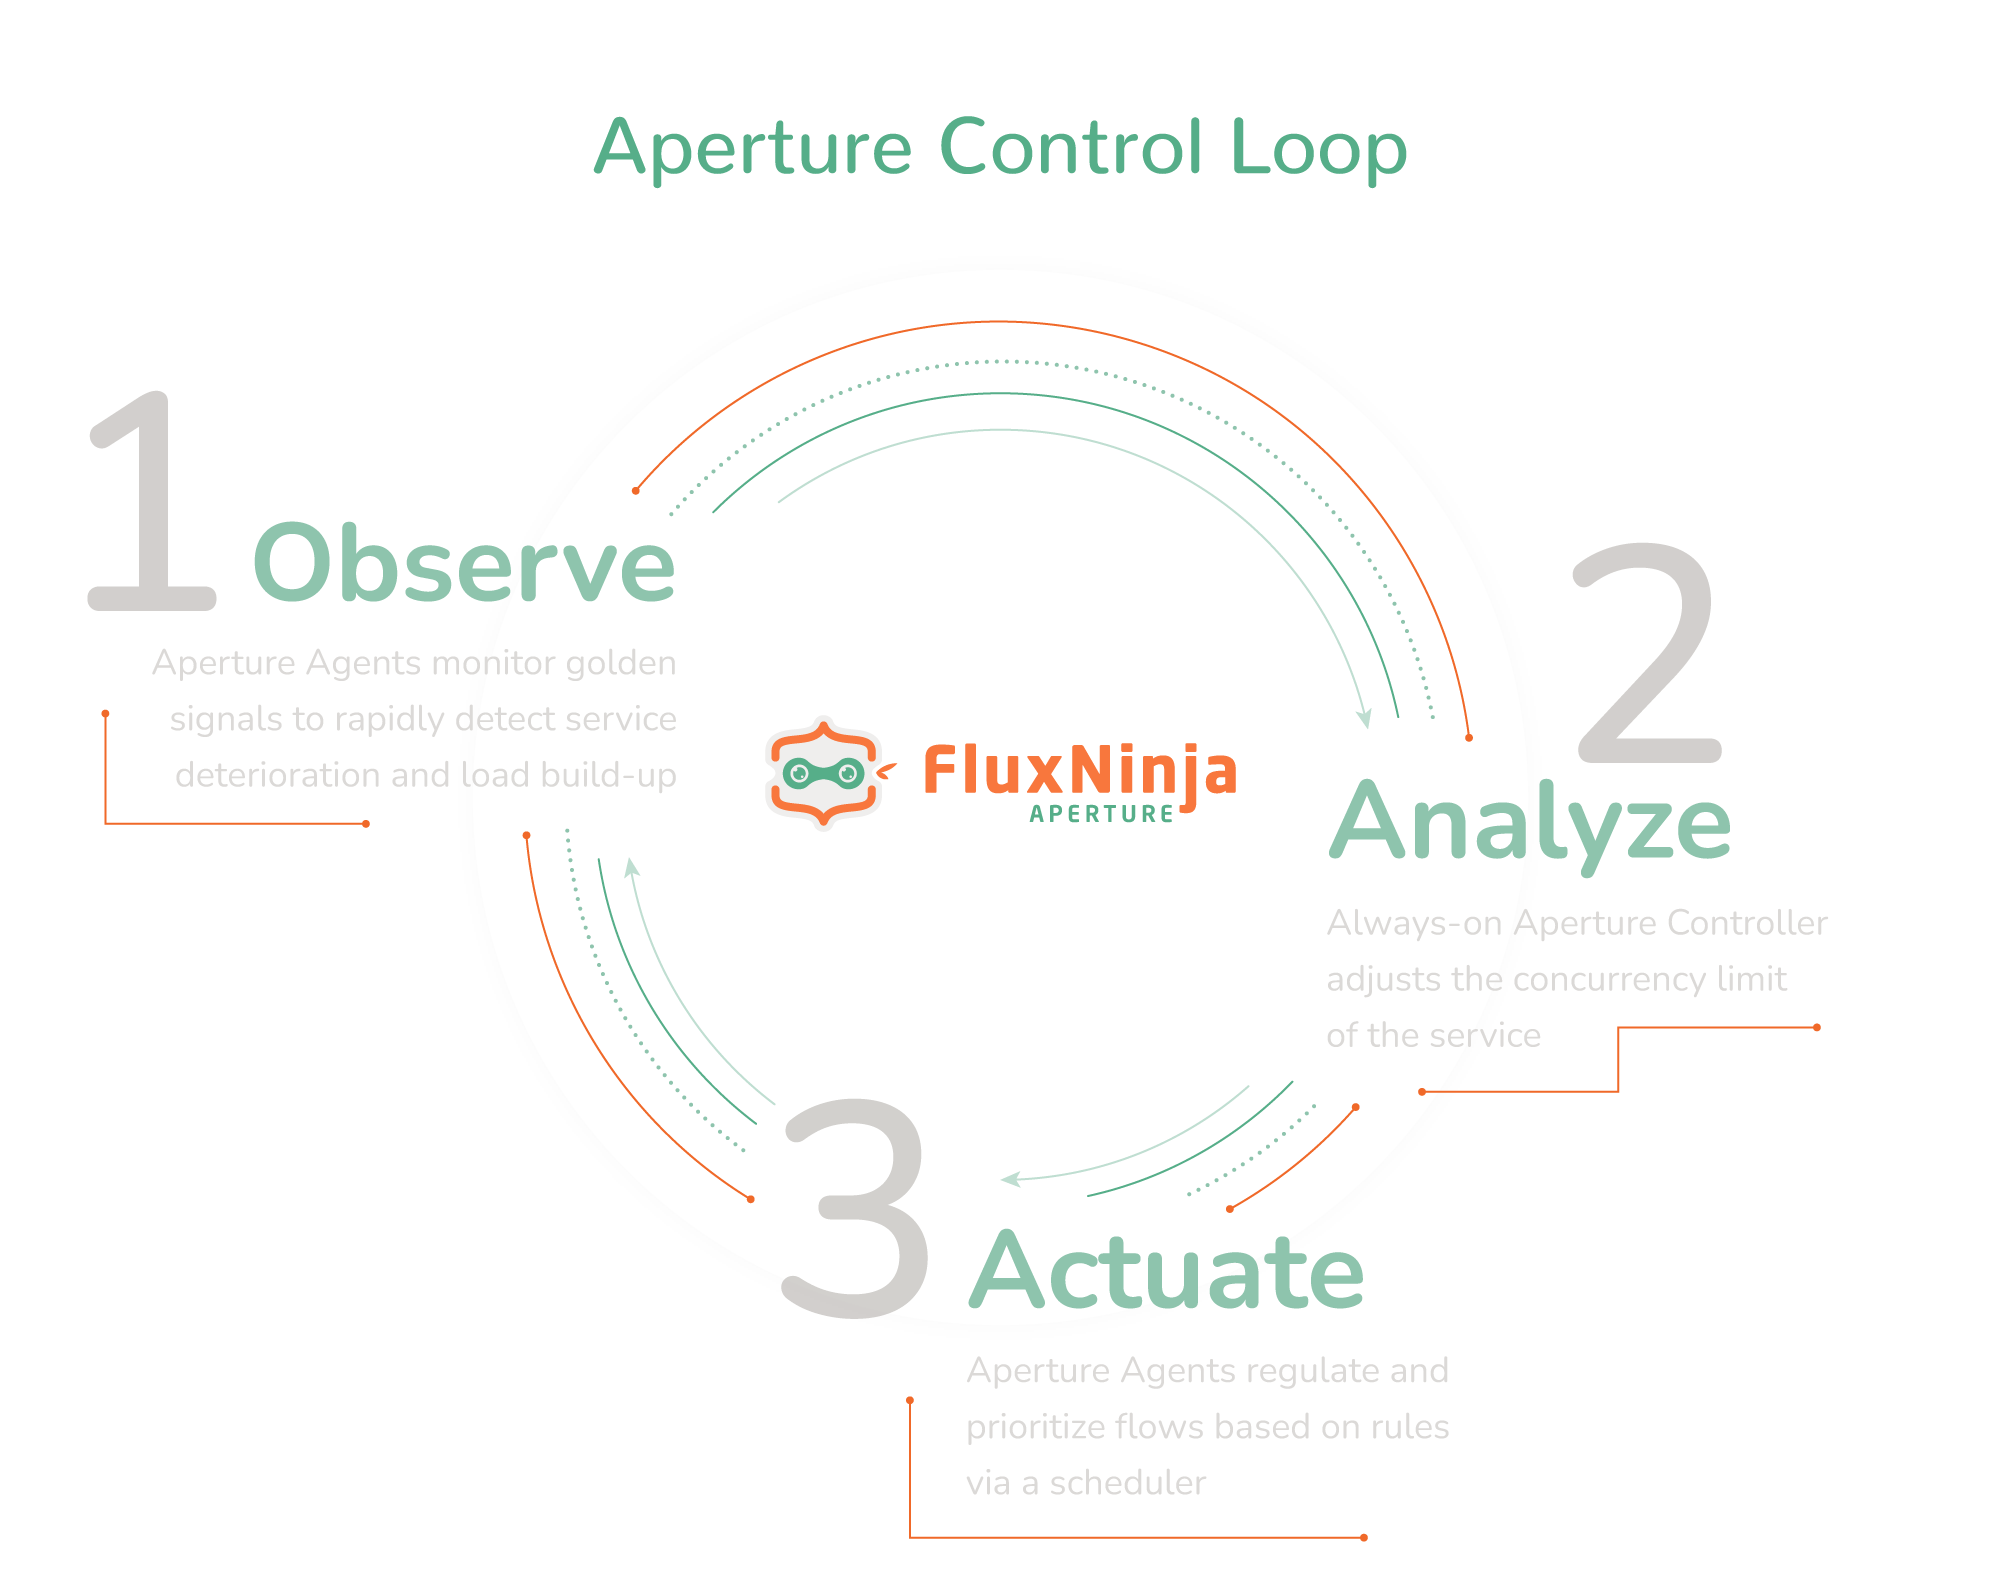 Aperture Control Loop